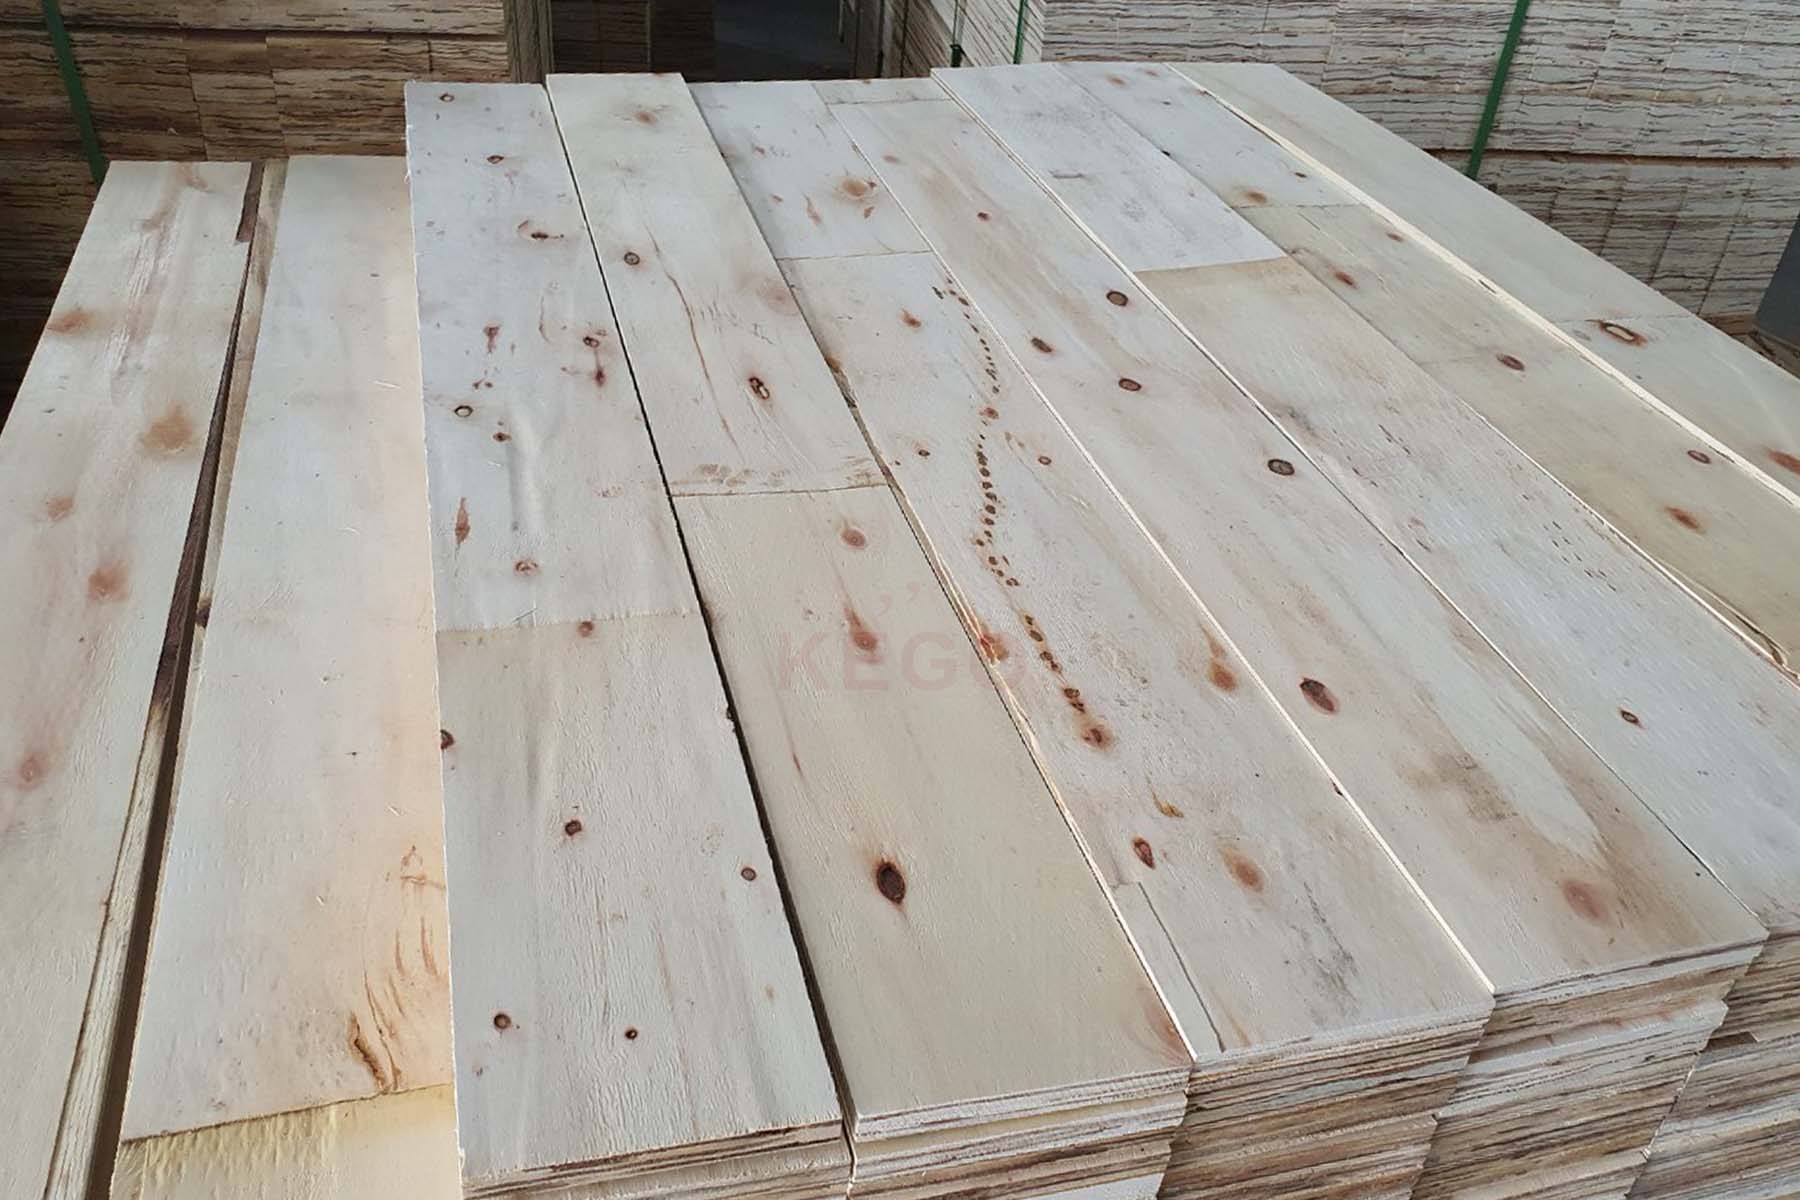 https://kego.com.vn/wp-content/uploads/2015/09/laminated-veneer-lumber-lvl-kego-8.jpg